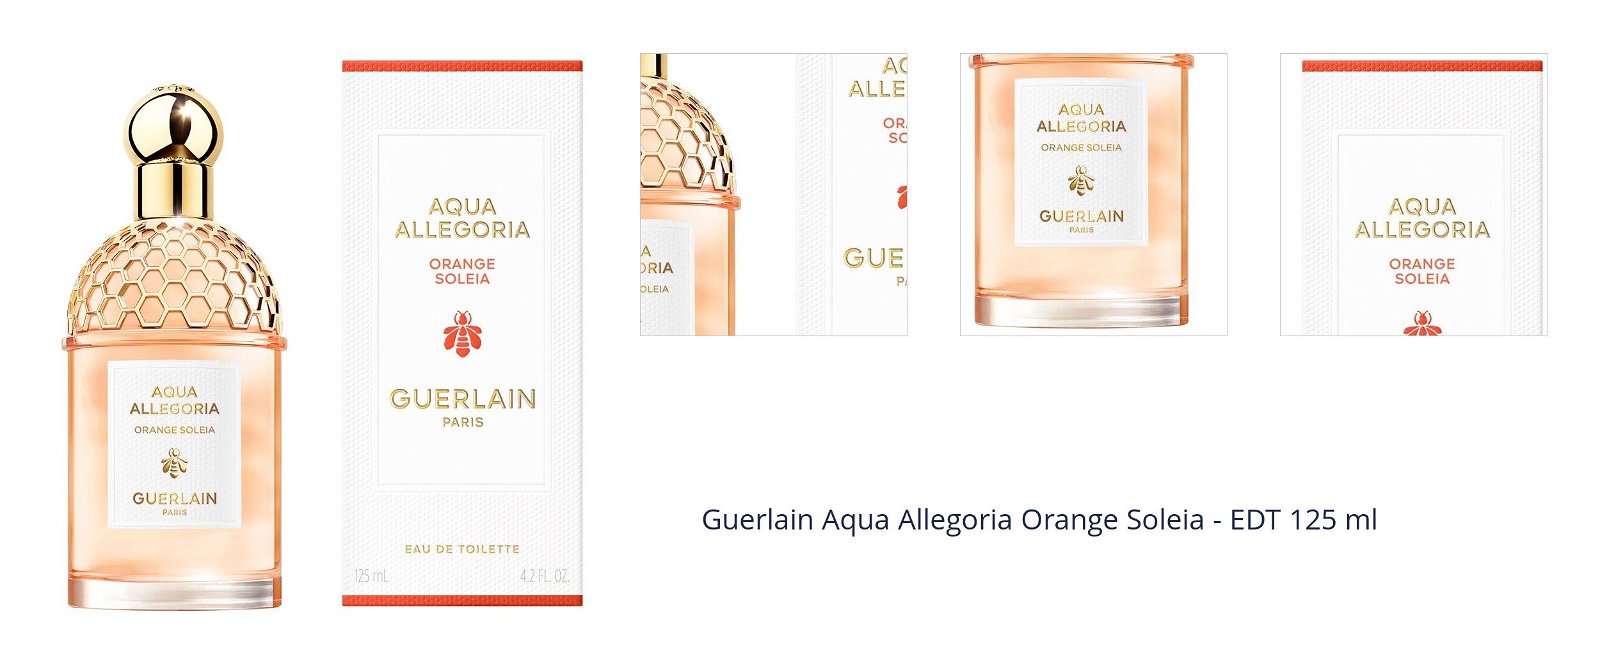 Guerlain Aqua Allegoria Orange Soleia - EDT 125 ml 1